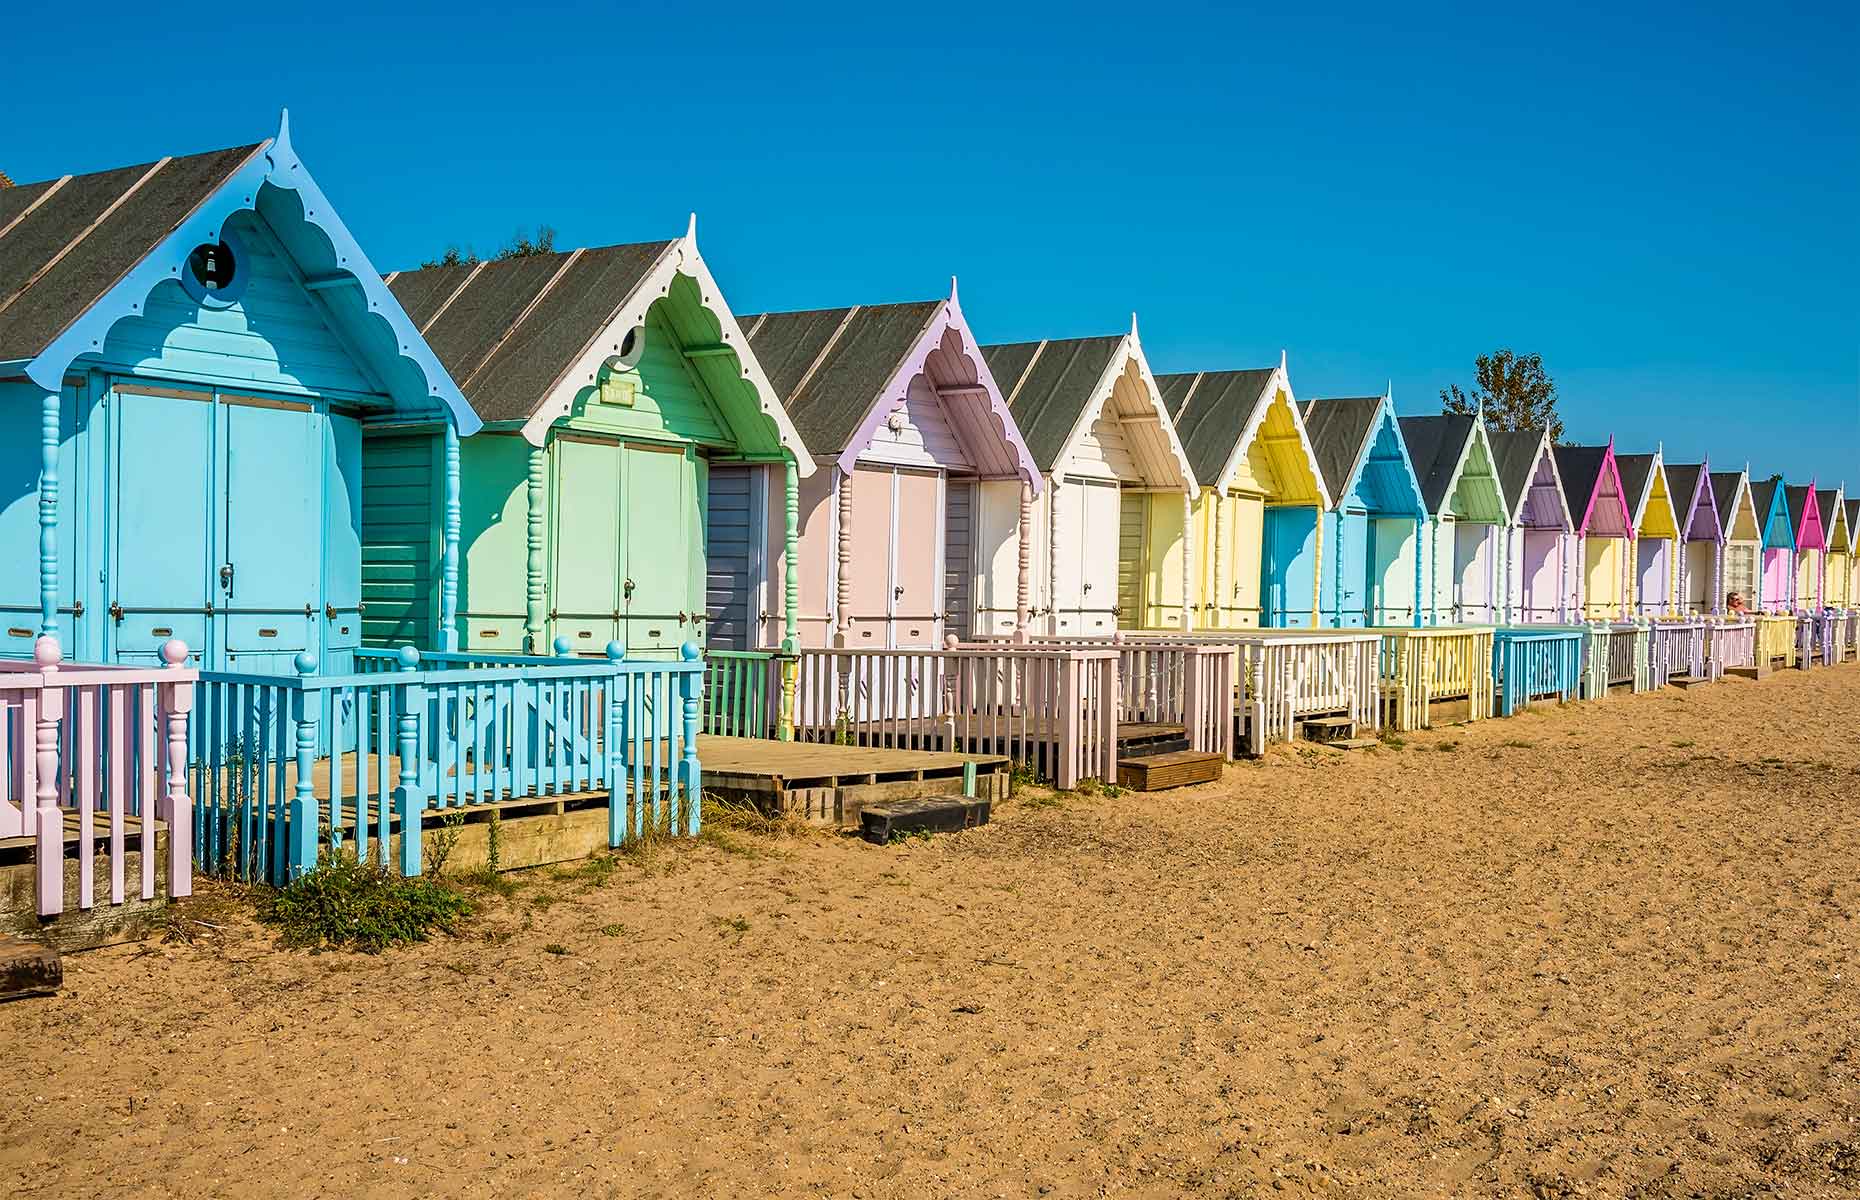 West Mersea beach huts (Image: Nicola Pulham/Shutterstock)